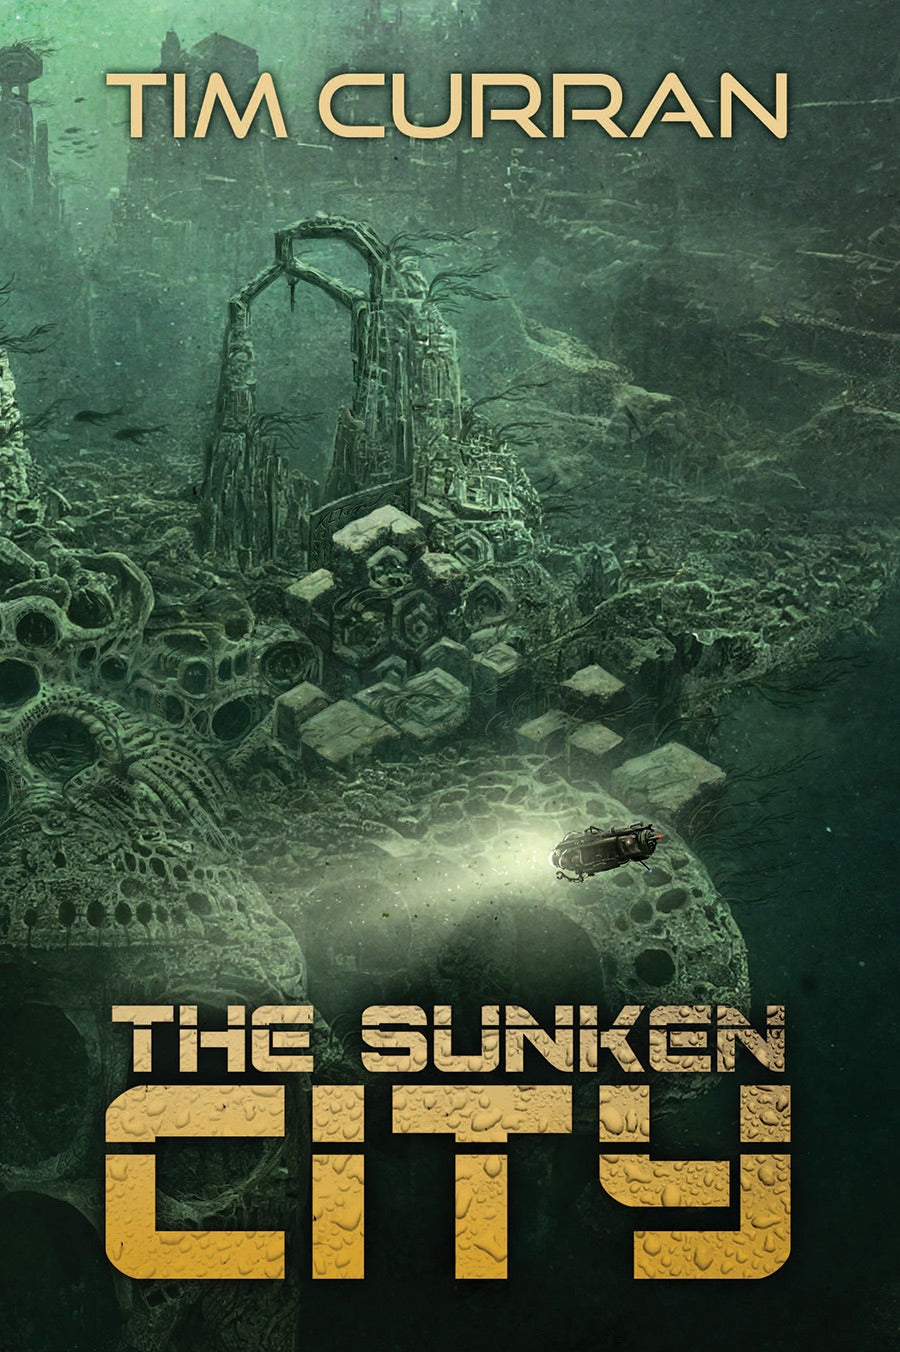 The Sunken City by Tim Curran